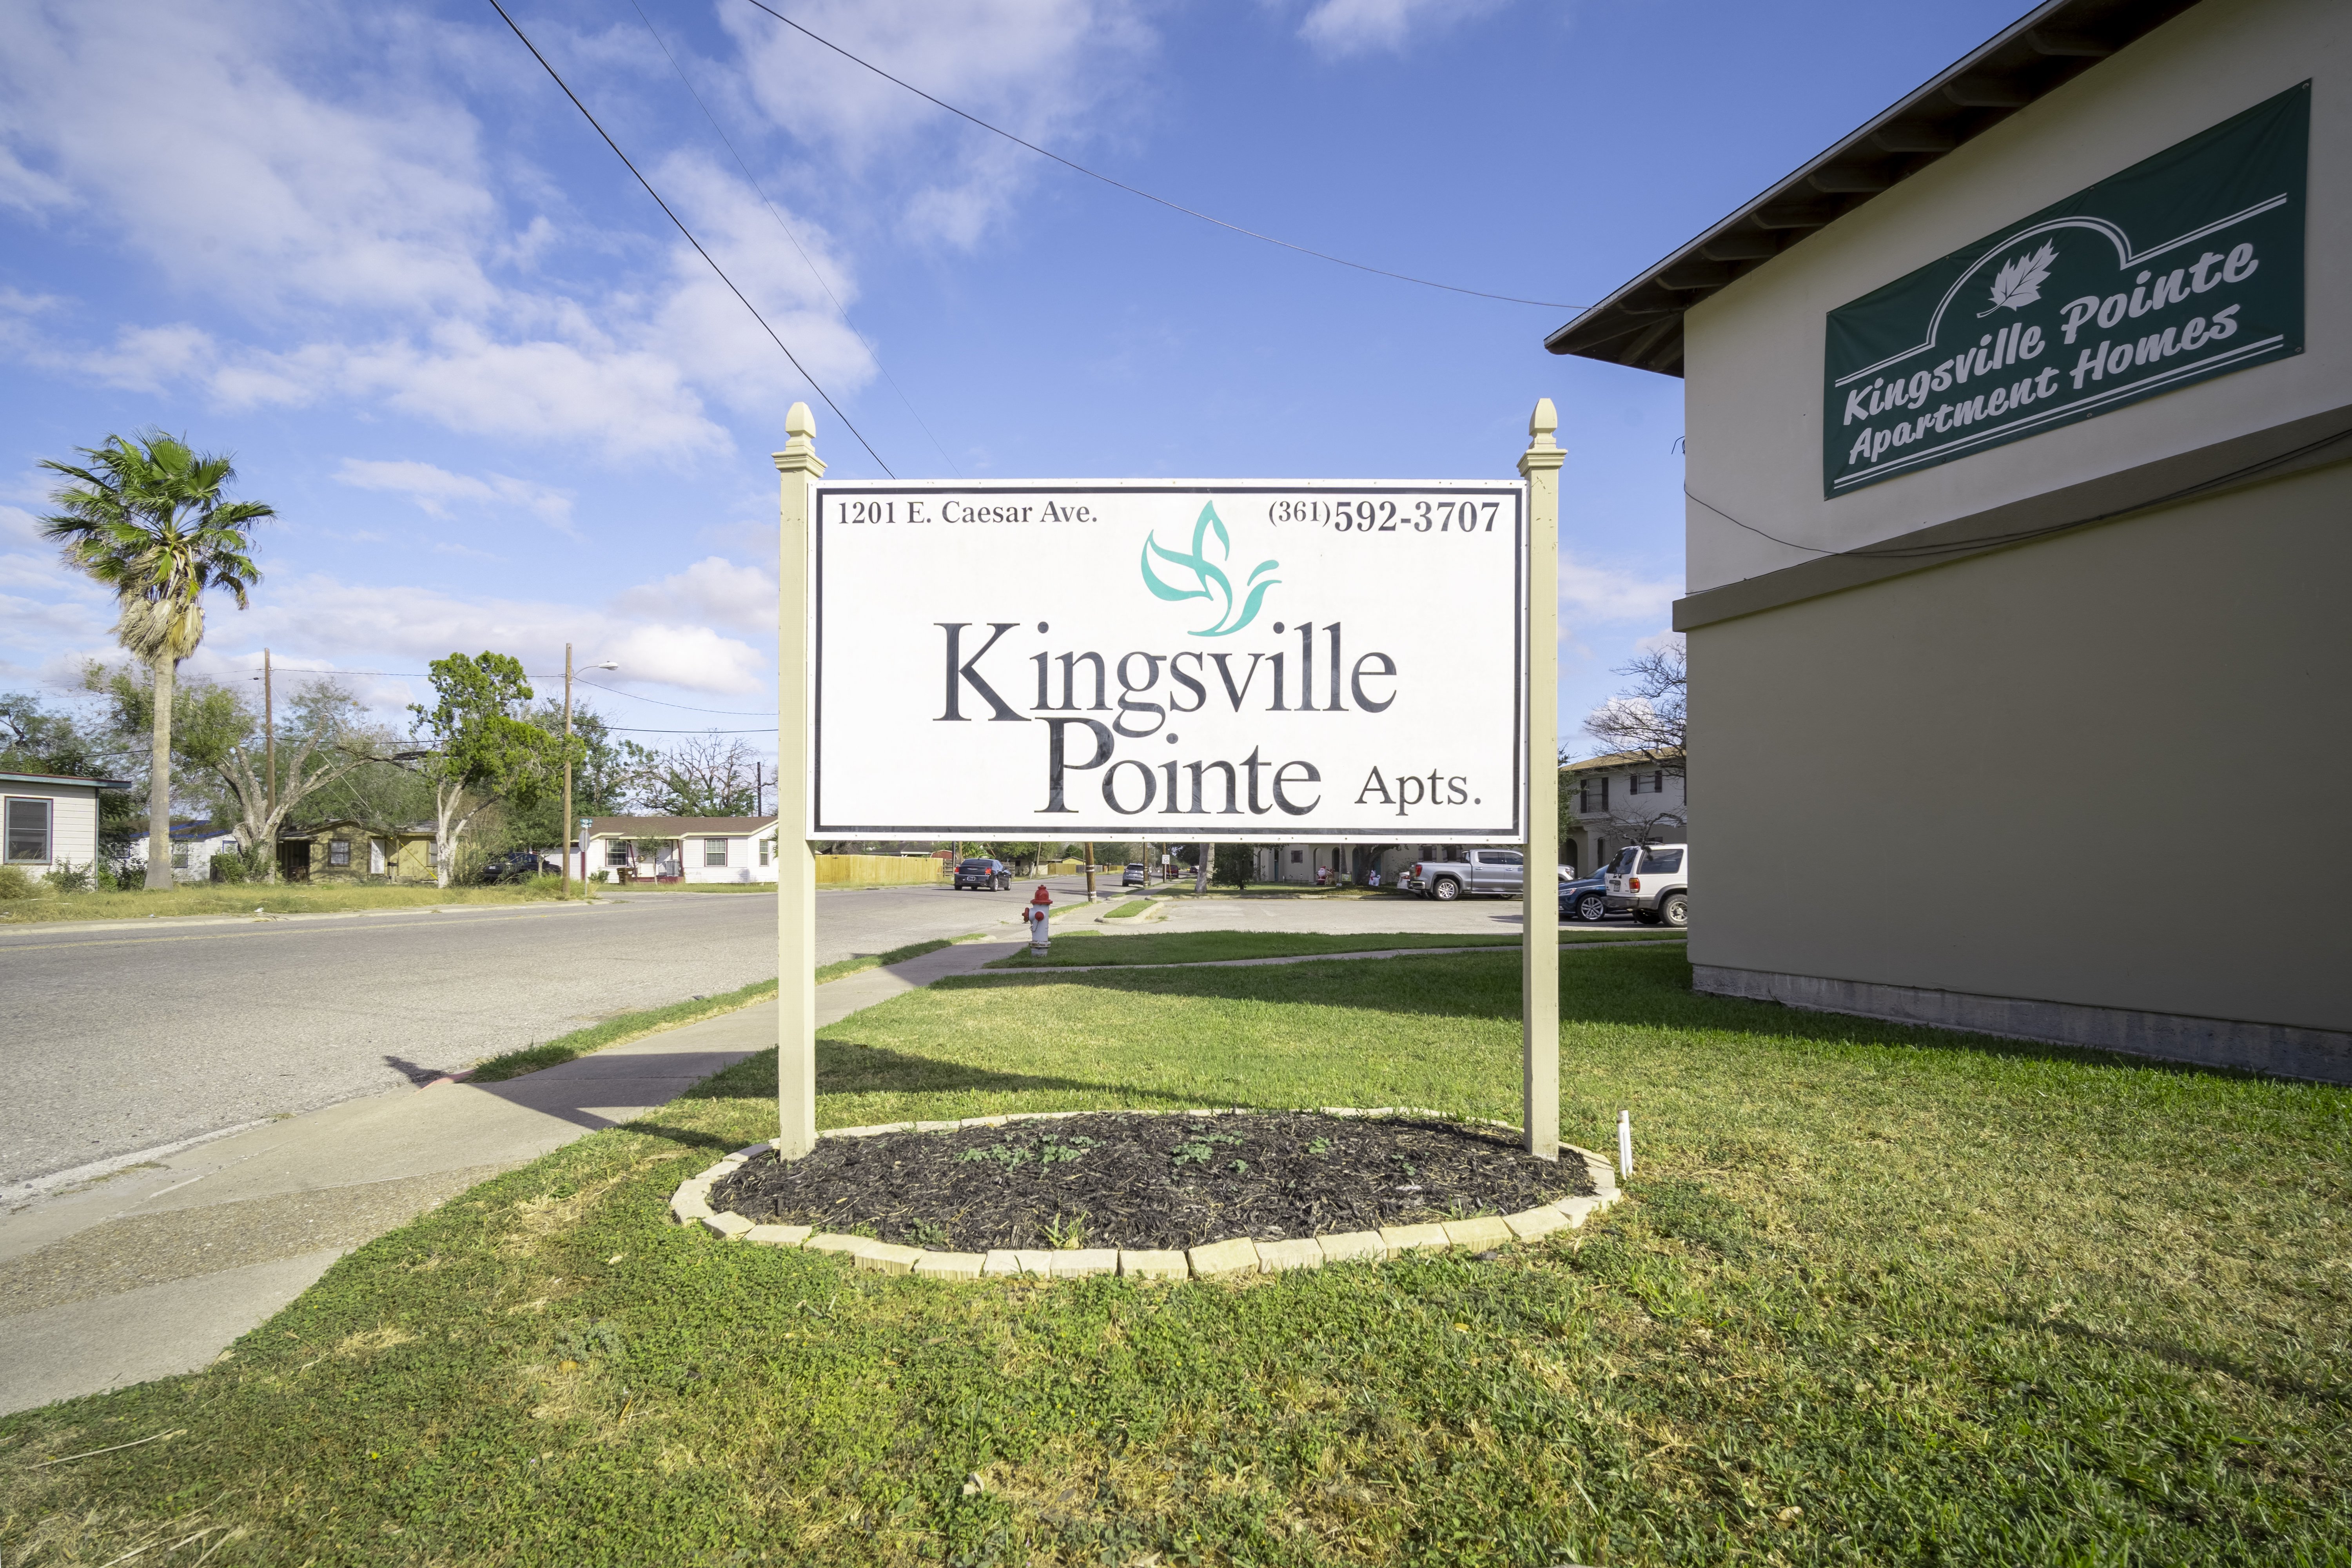 Kingsville Pointe